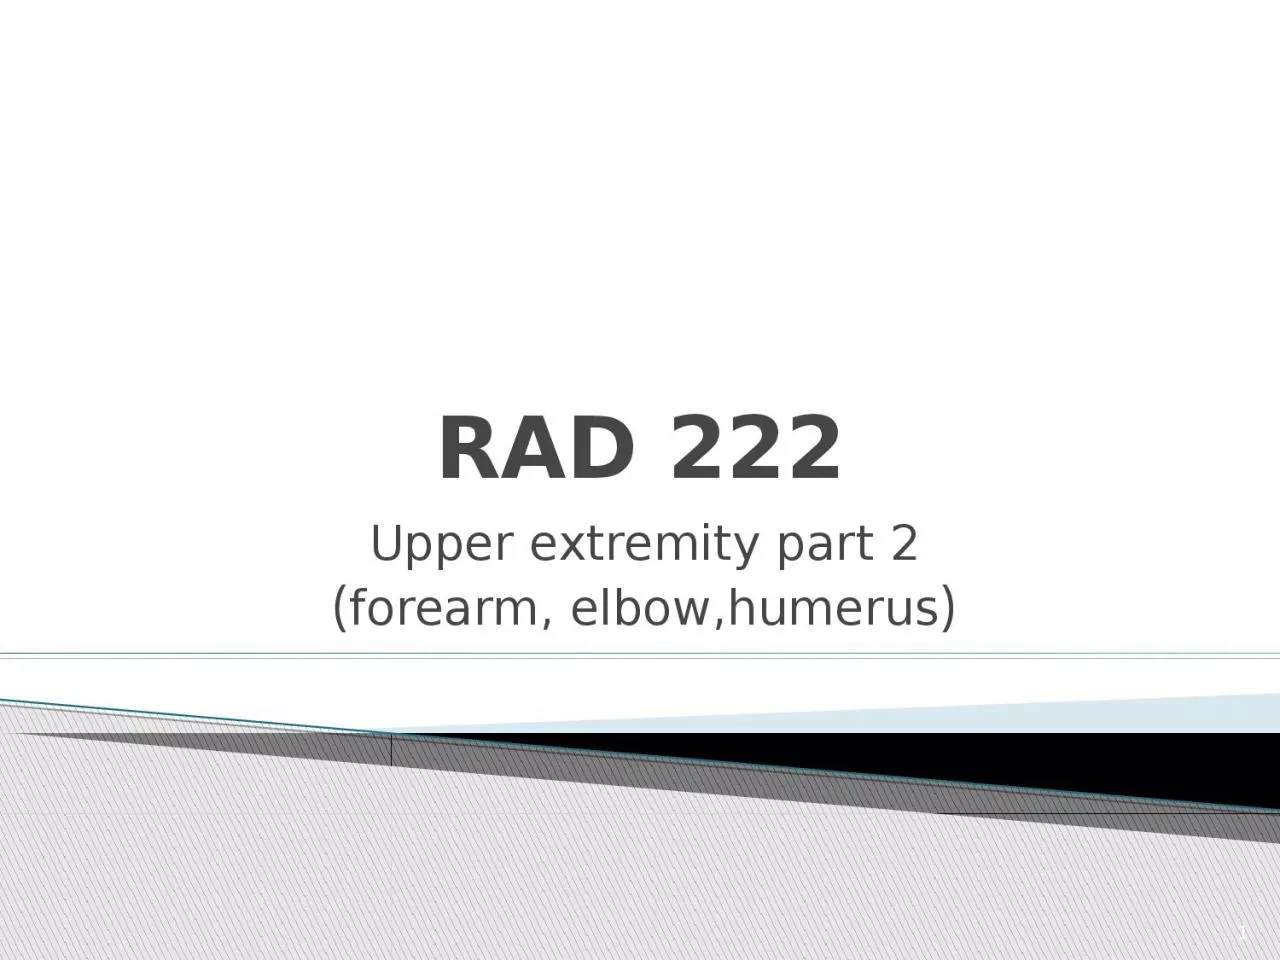 RAD 222 Upper extremity part 2